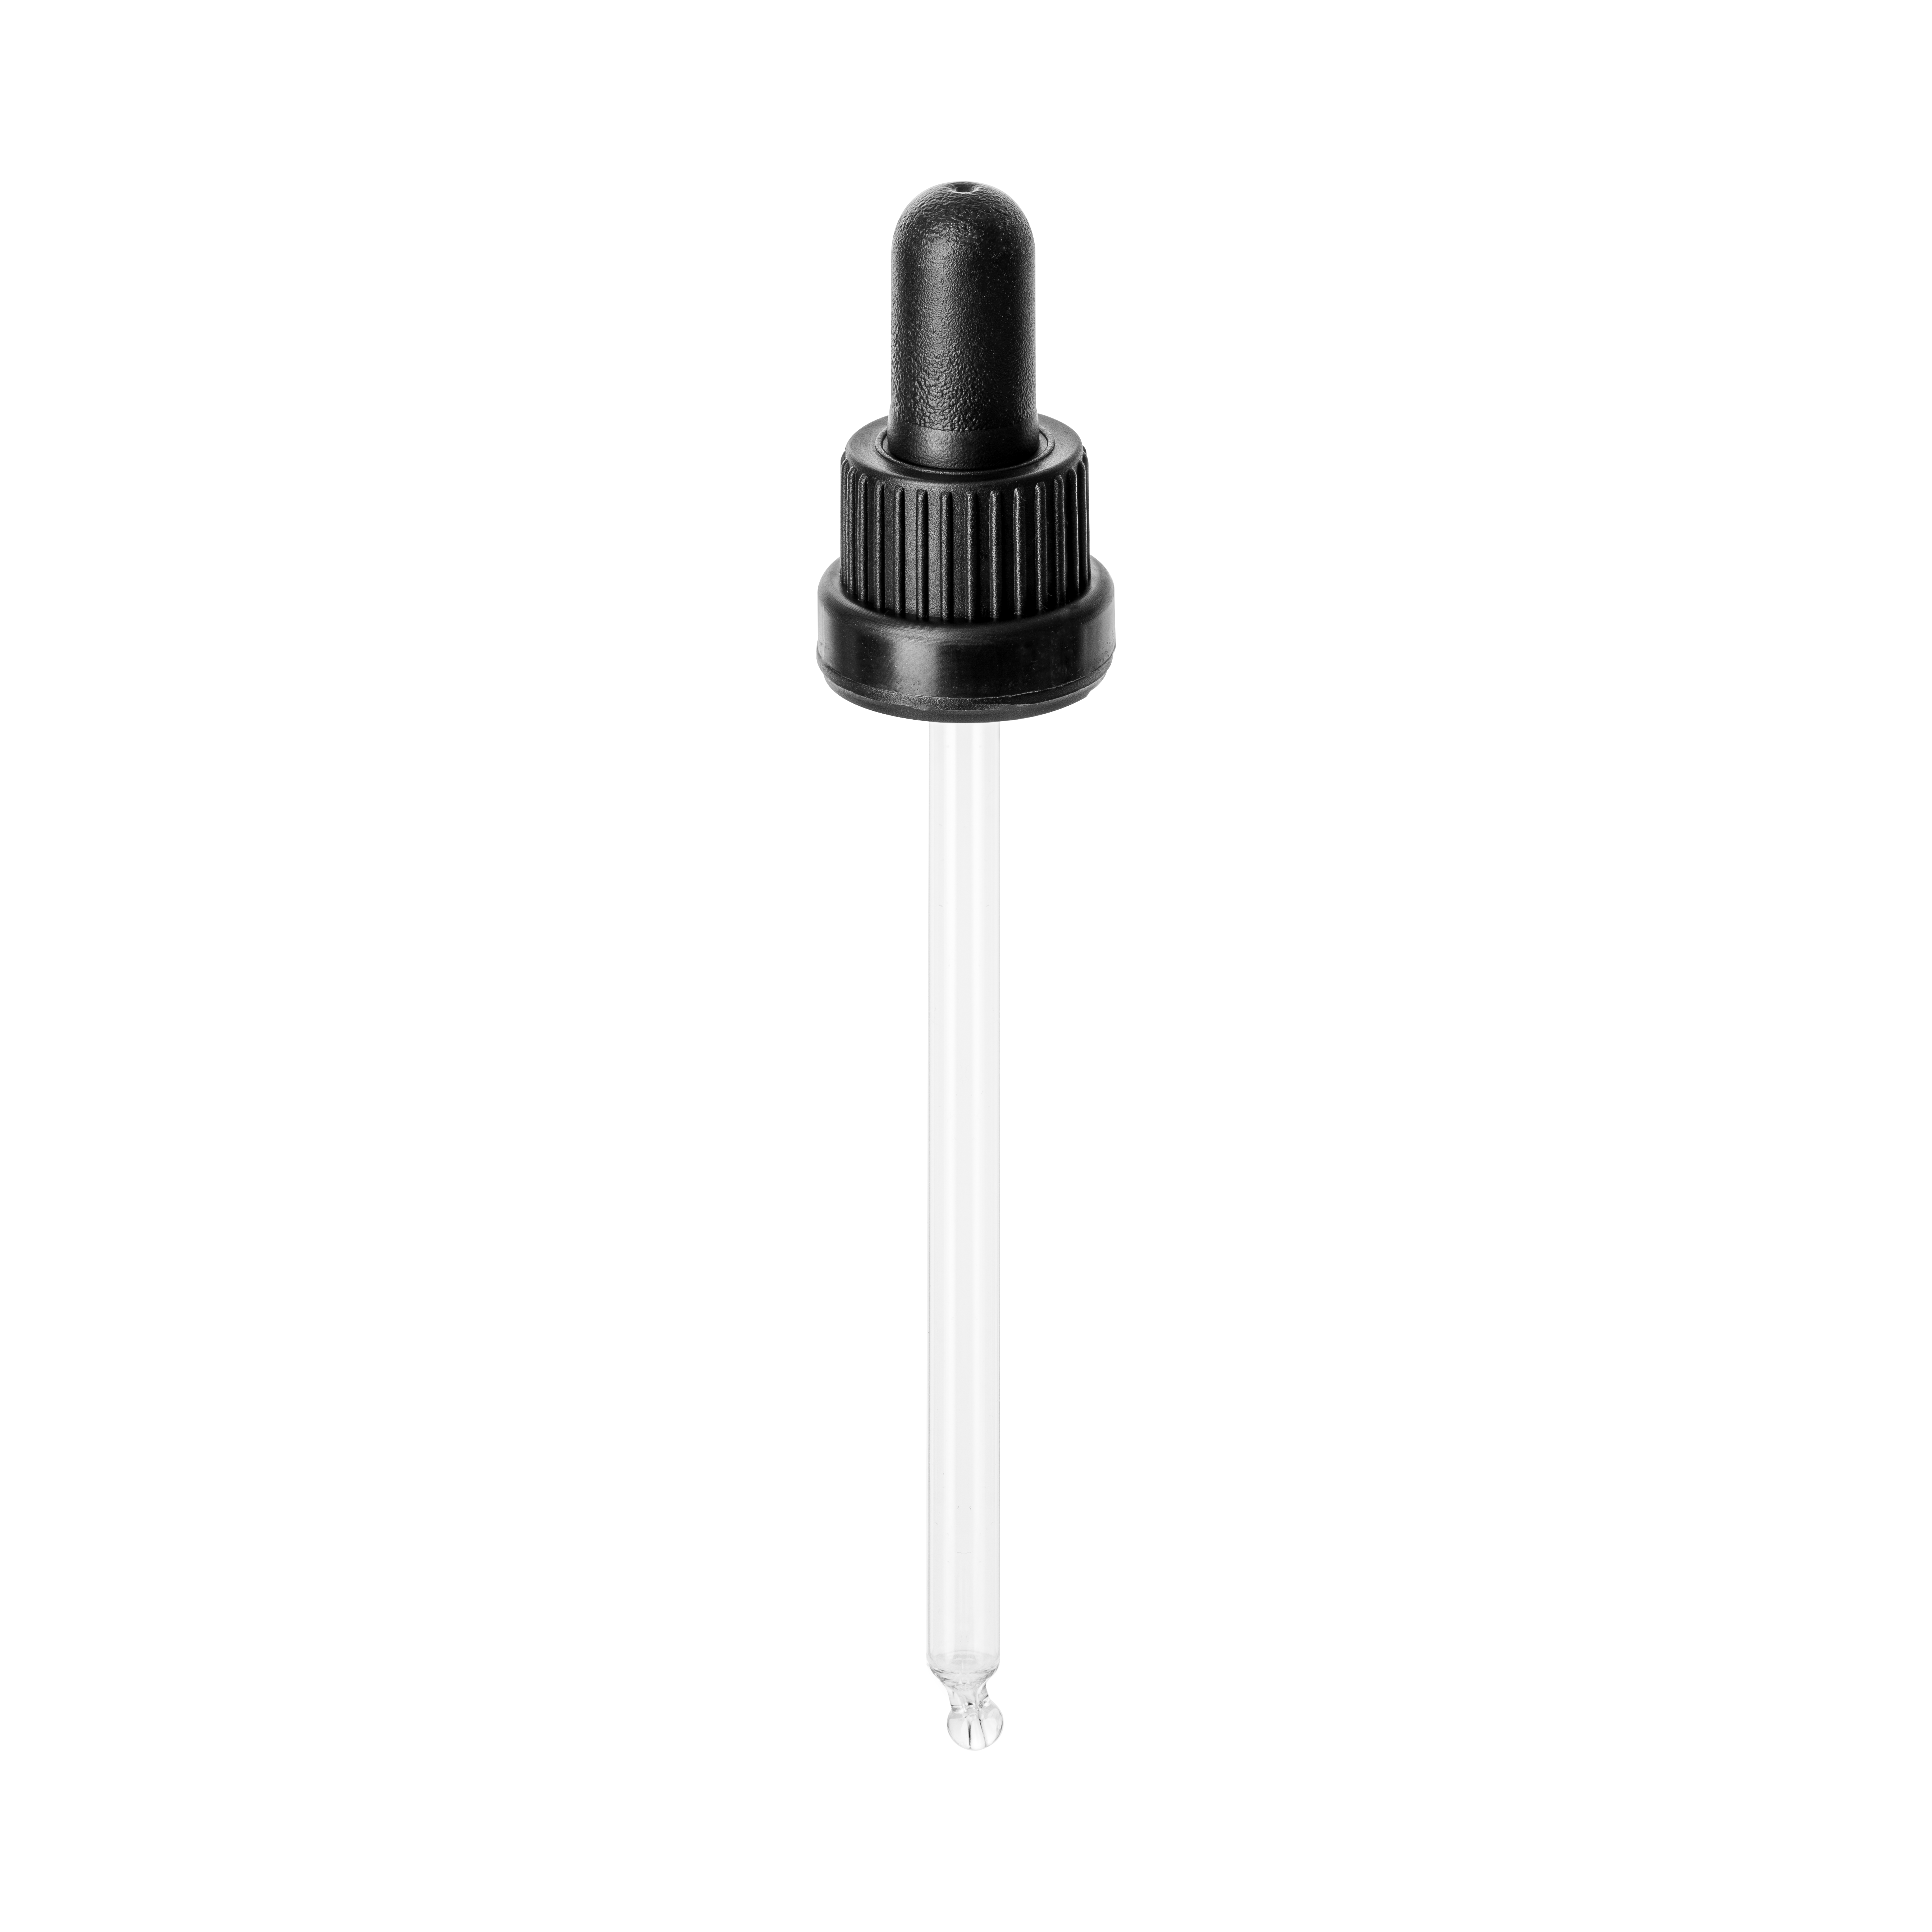 Pipette tamper evident DIN18, III, black, ribbed, bulb NBR, dose 1.0ml, bent ball tip (Orion 100)